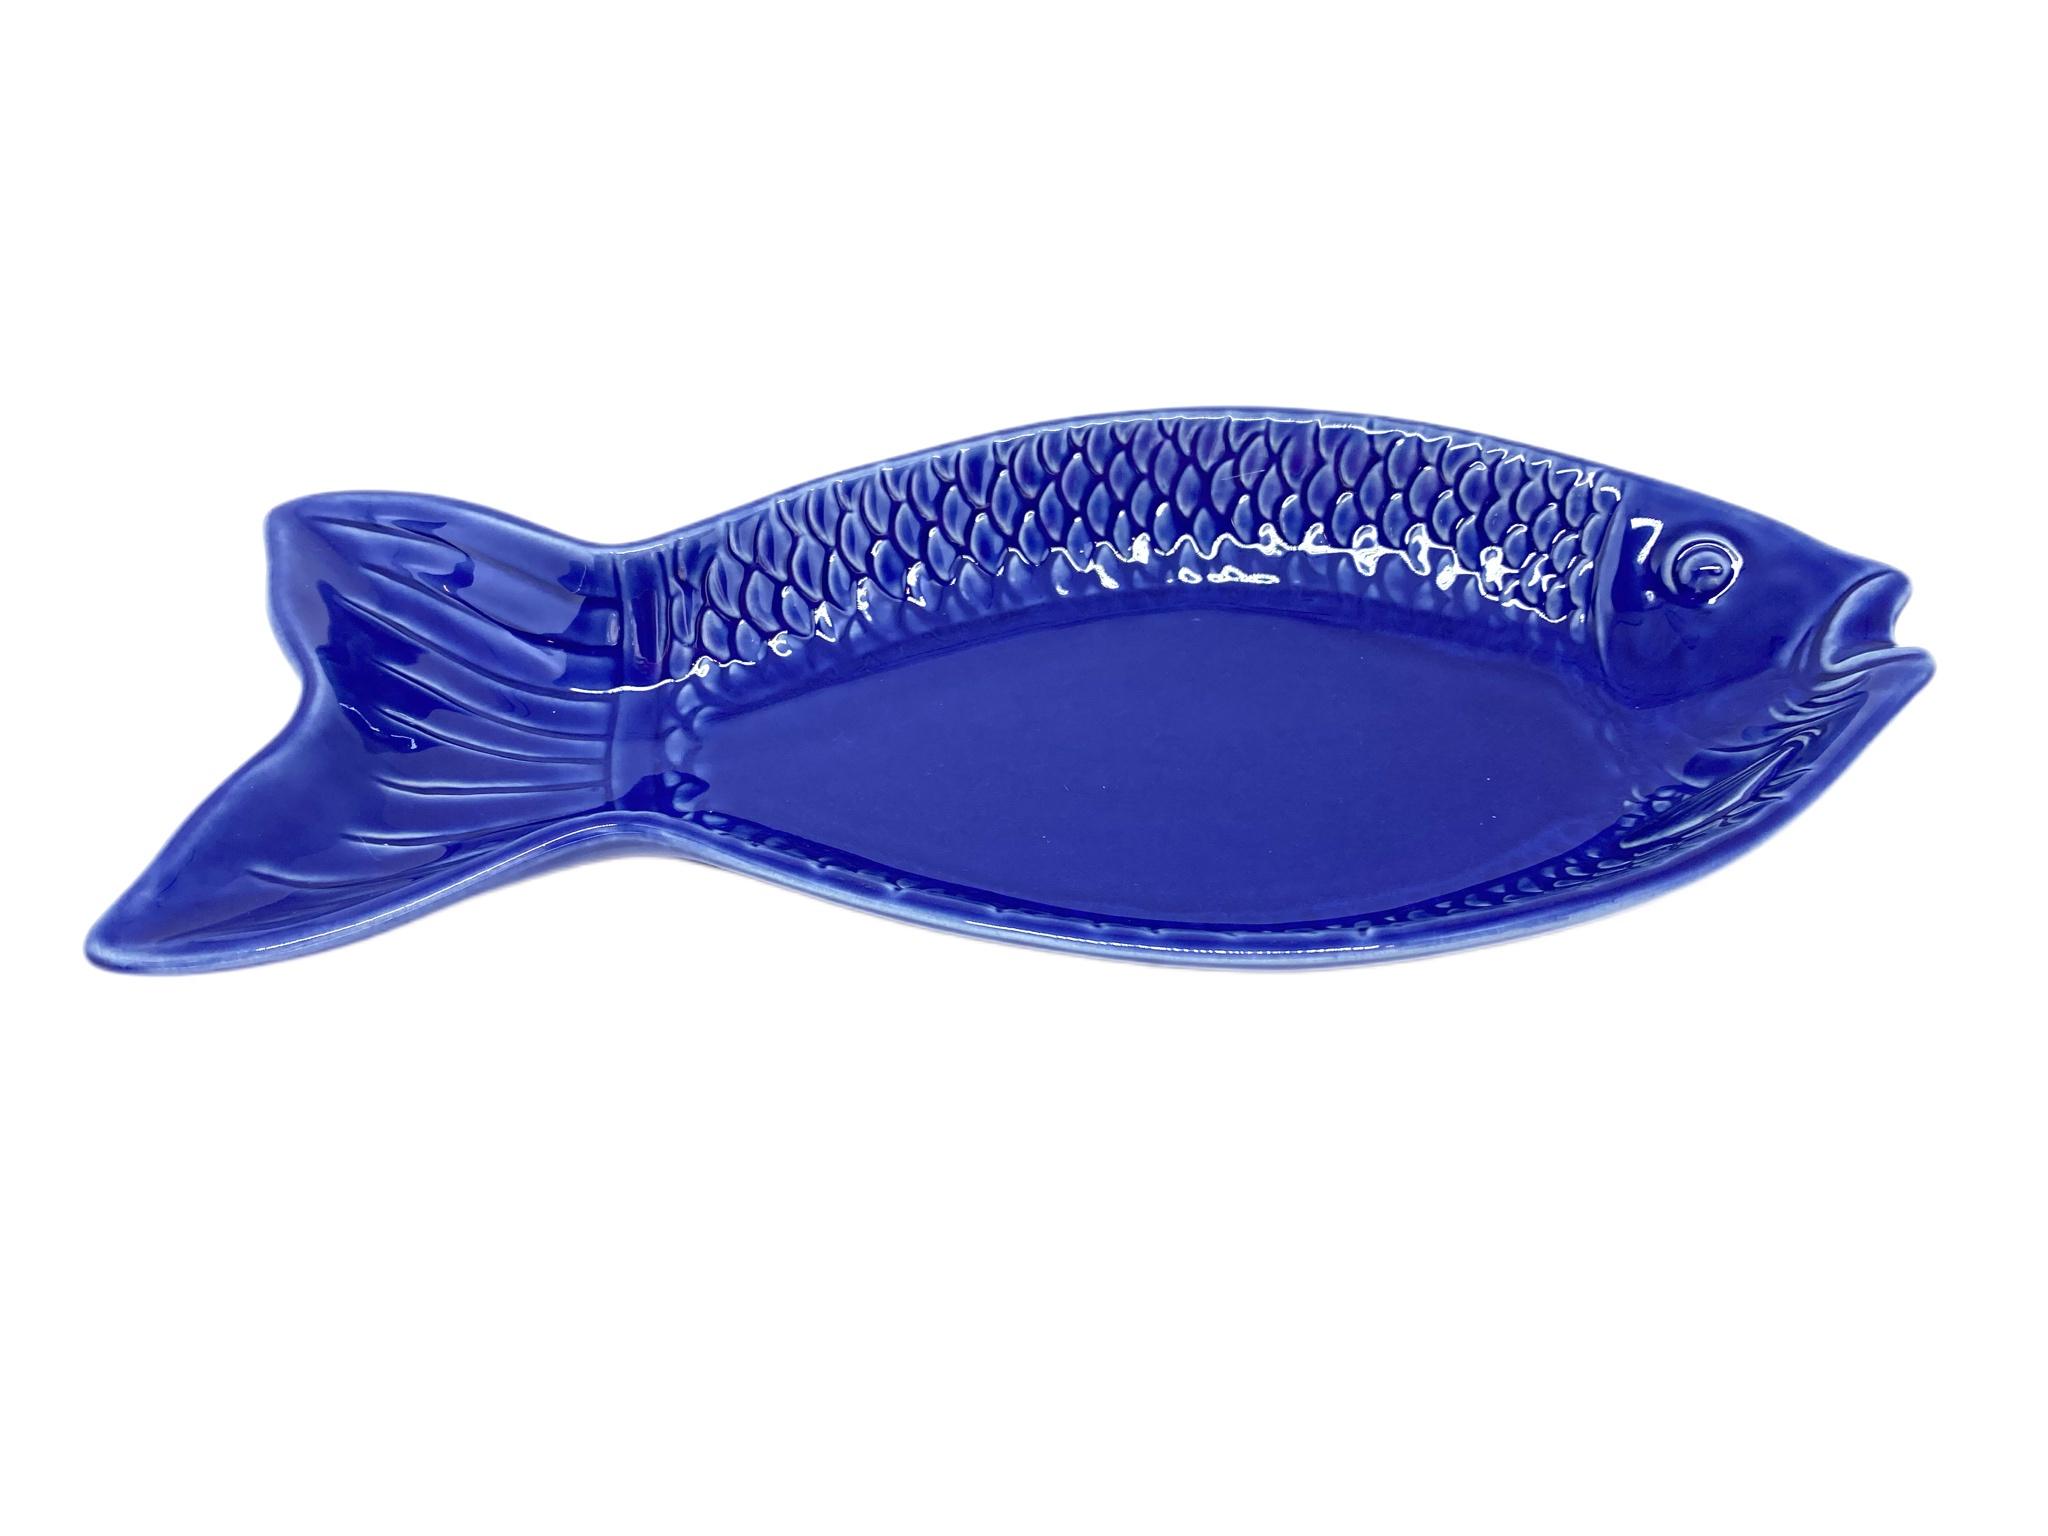 Jogos 2 pratos de peixes decorativos cerâmica ocean azul 28X13 CM